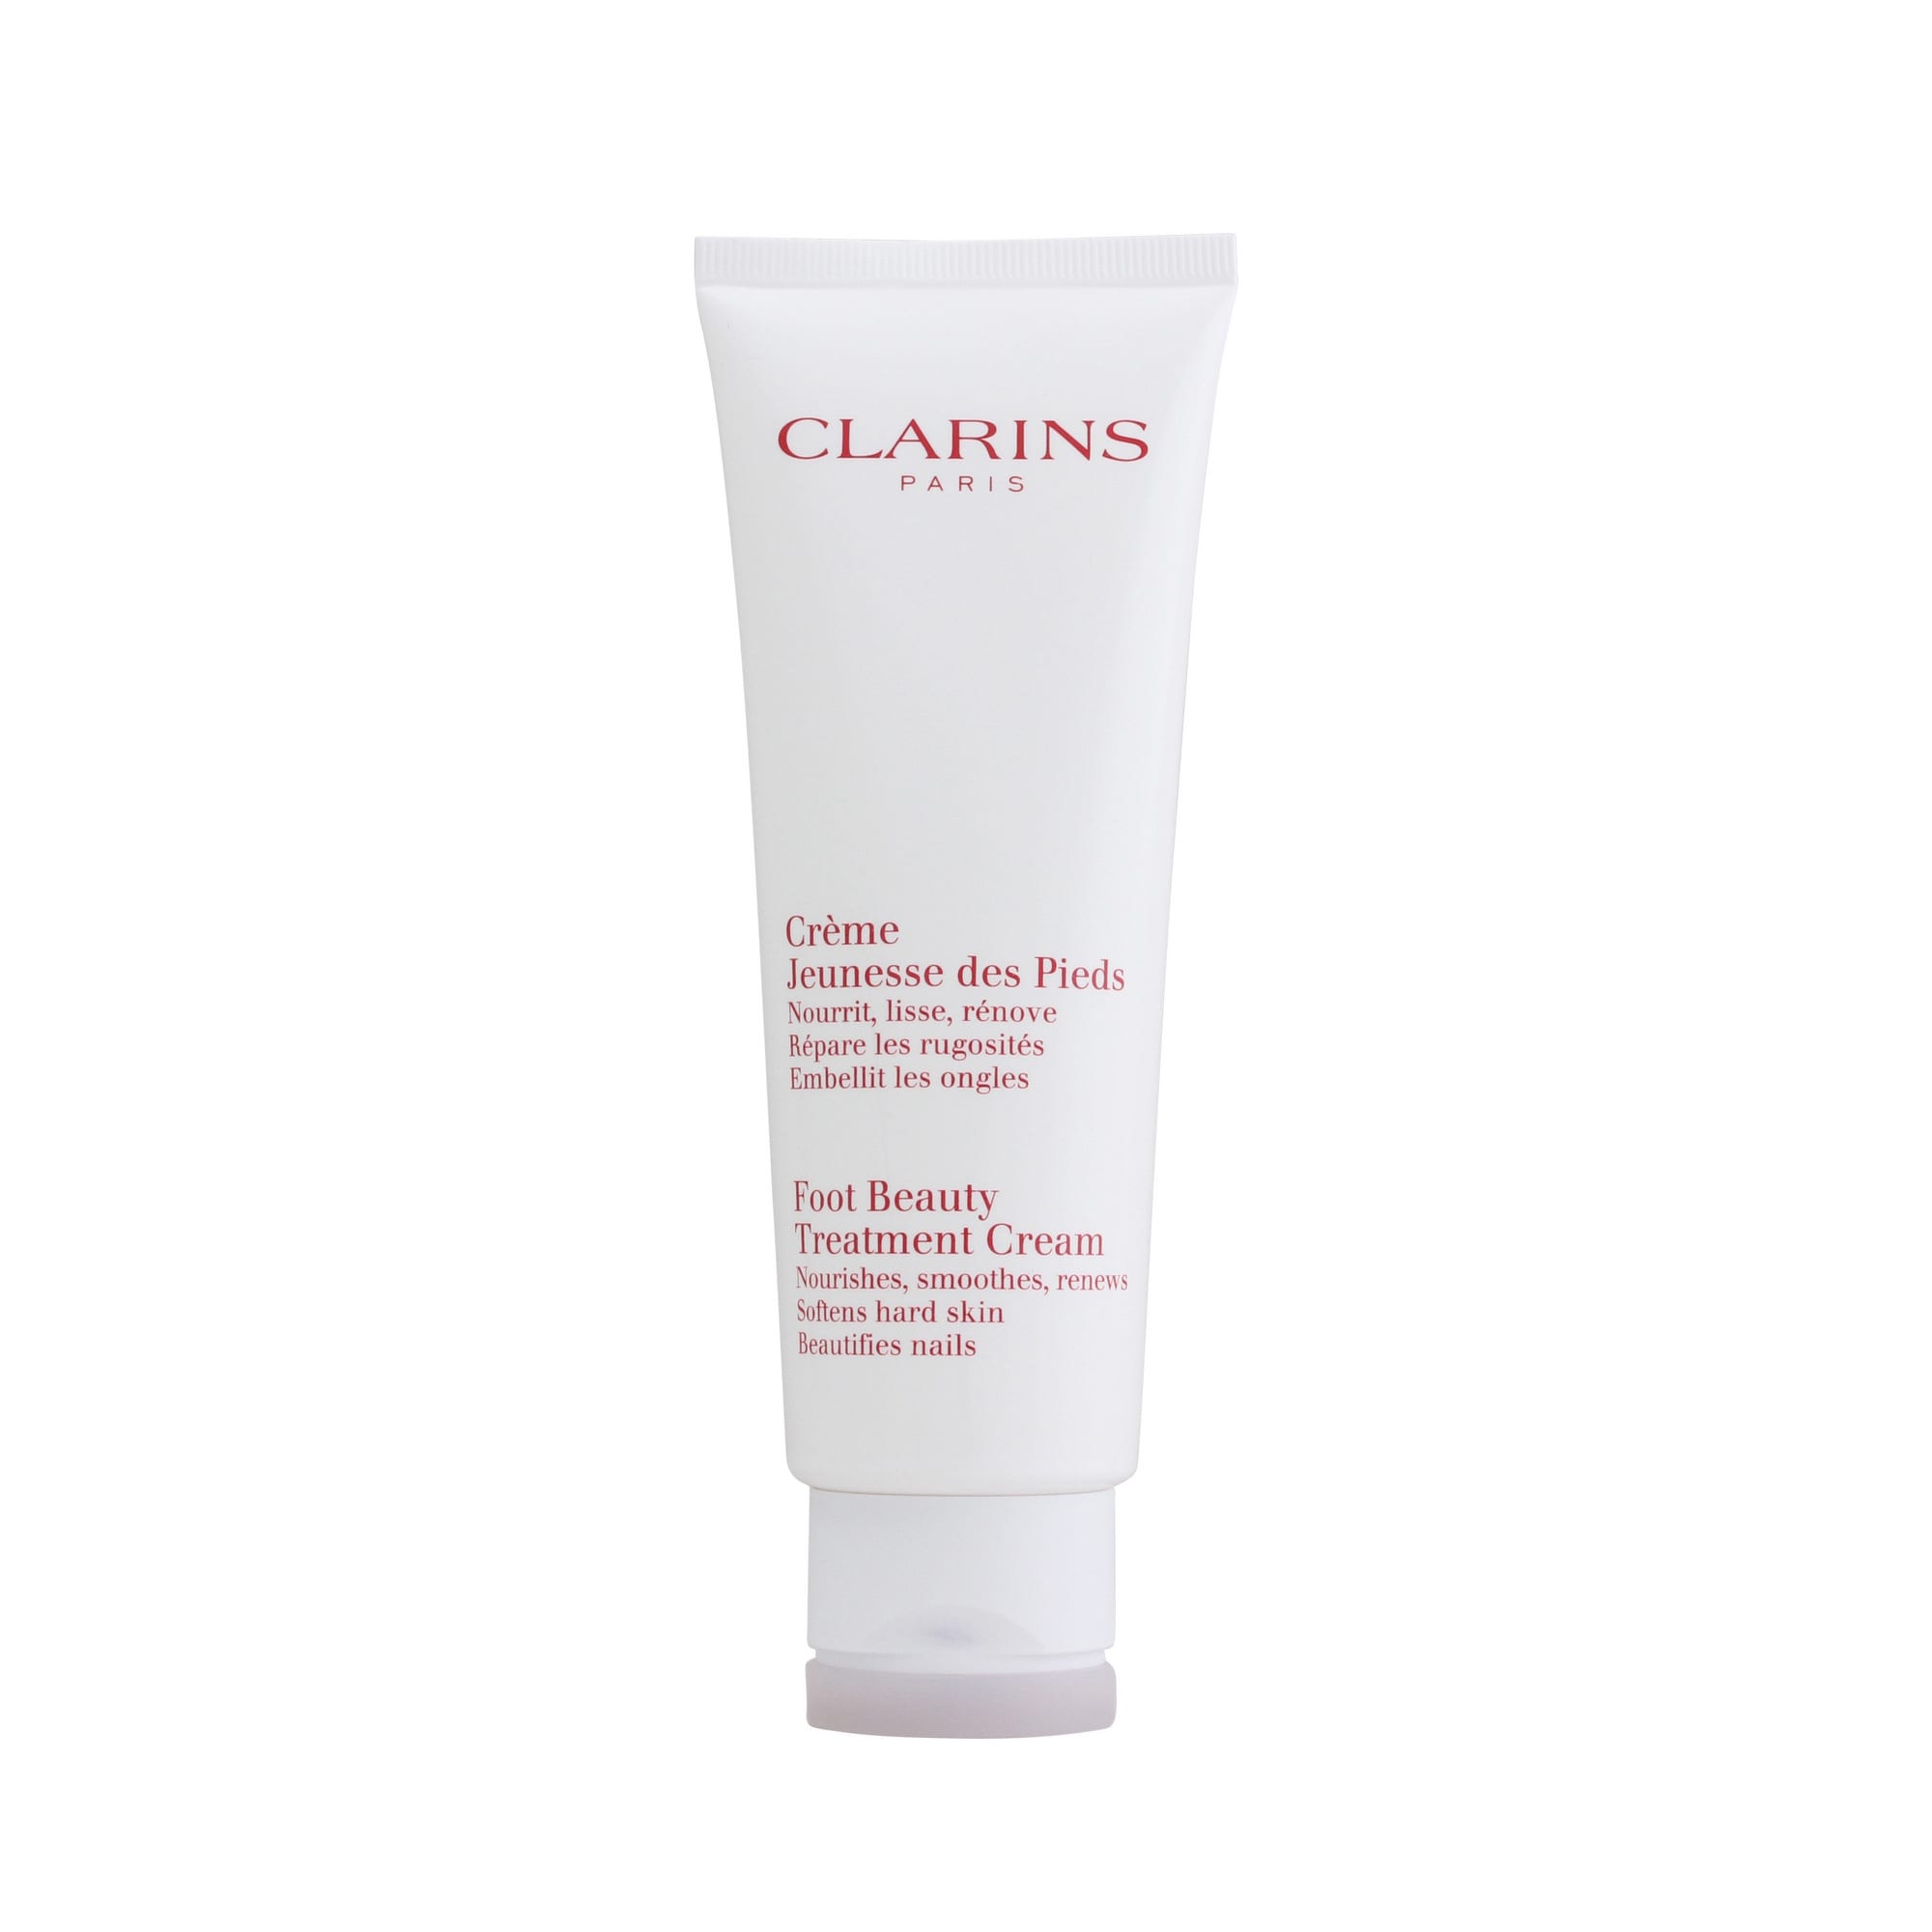 Foot Beauty Treatment Cream, 125 ml från Clarins